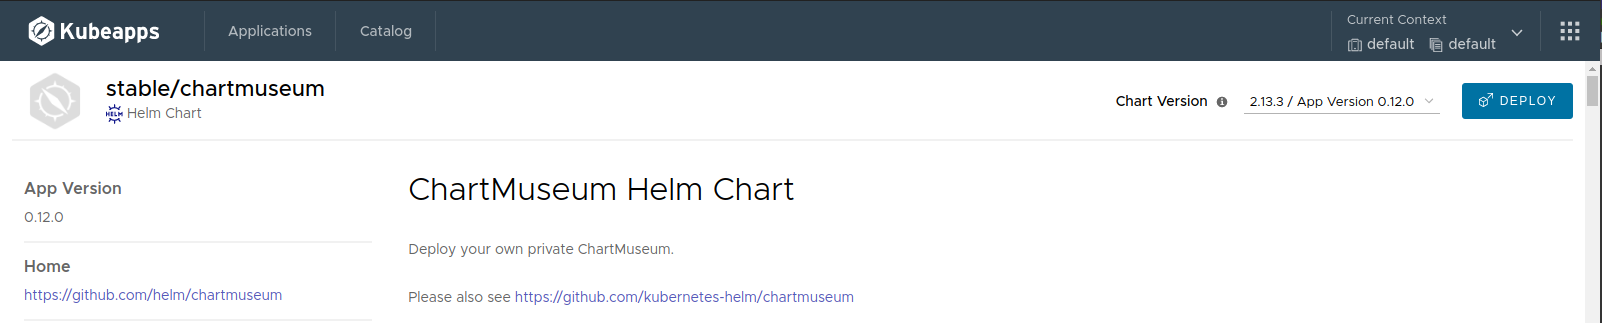 ChartMuseum Chart